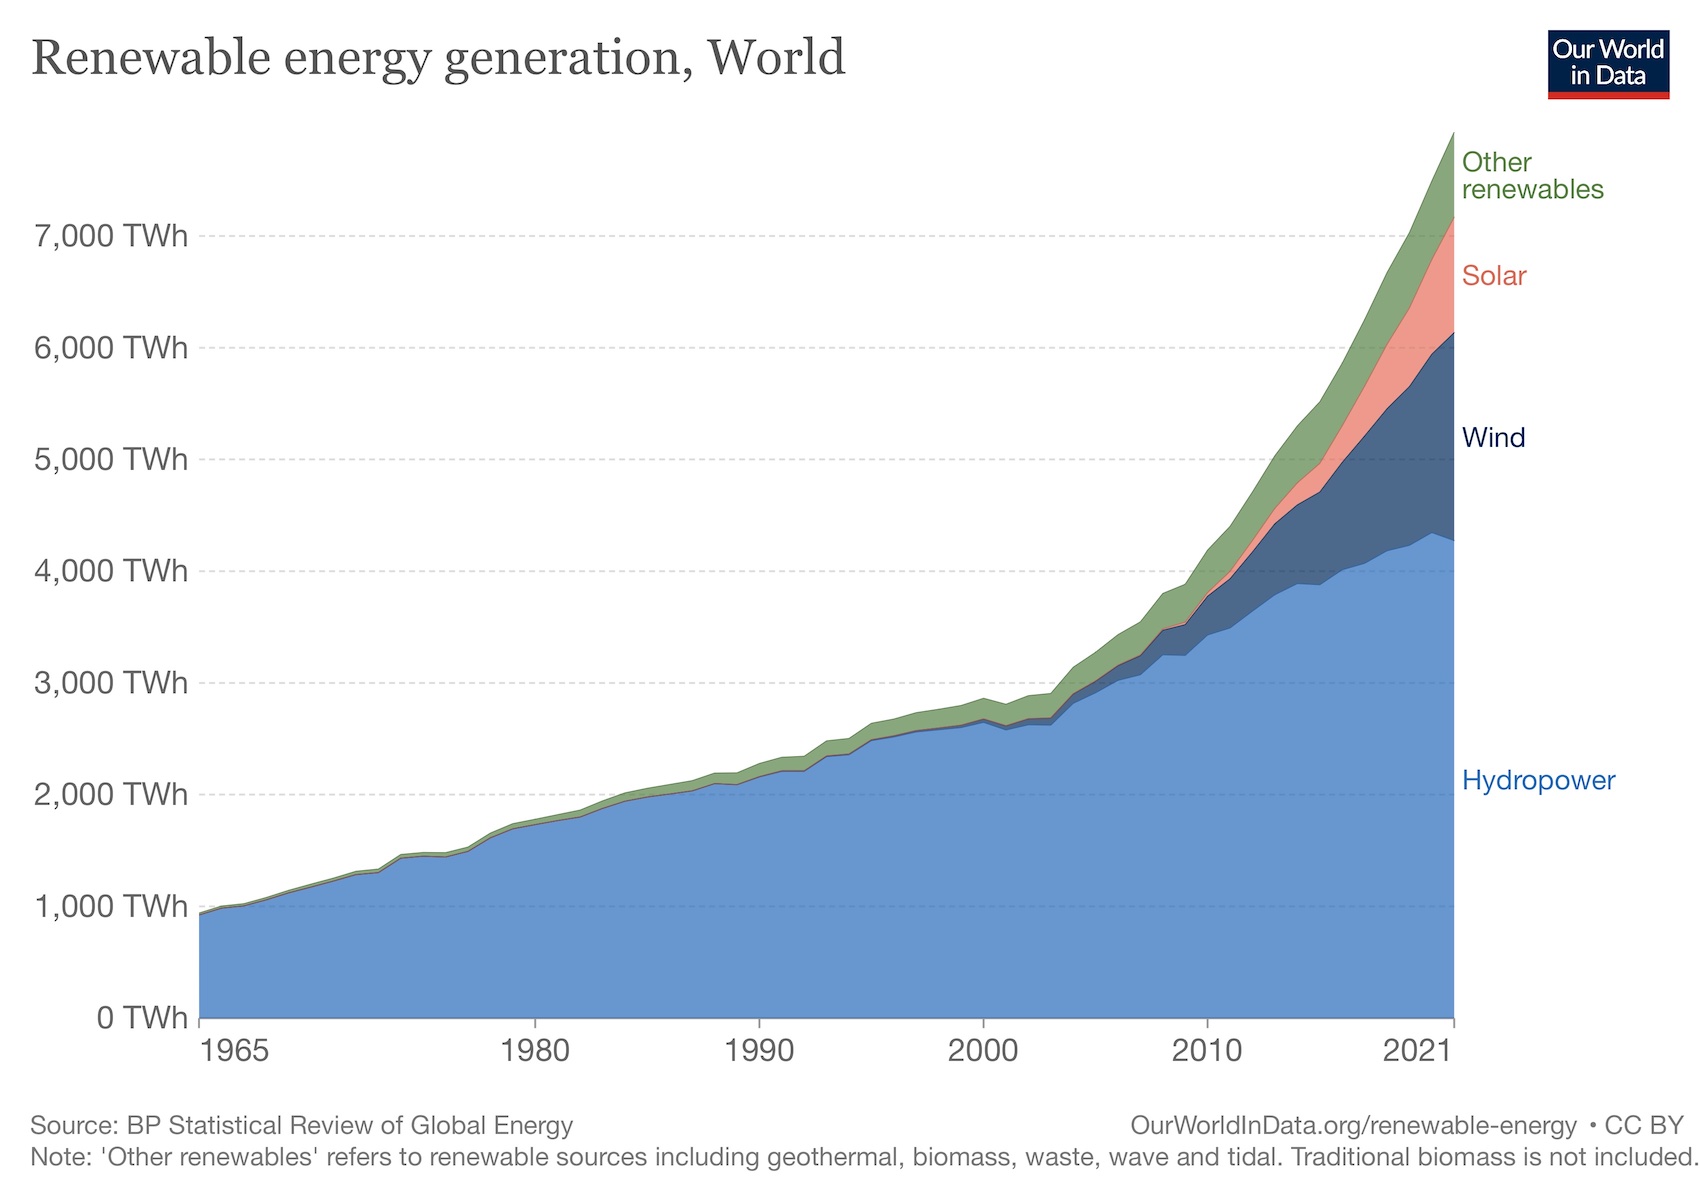 World renewable energy generation